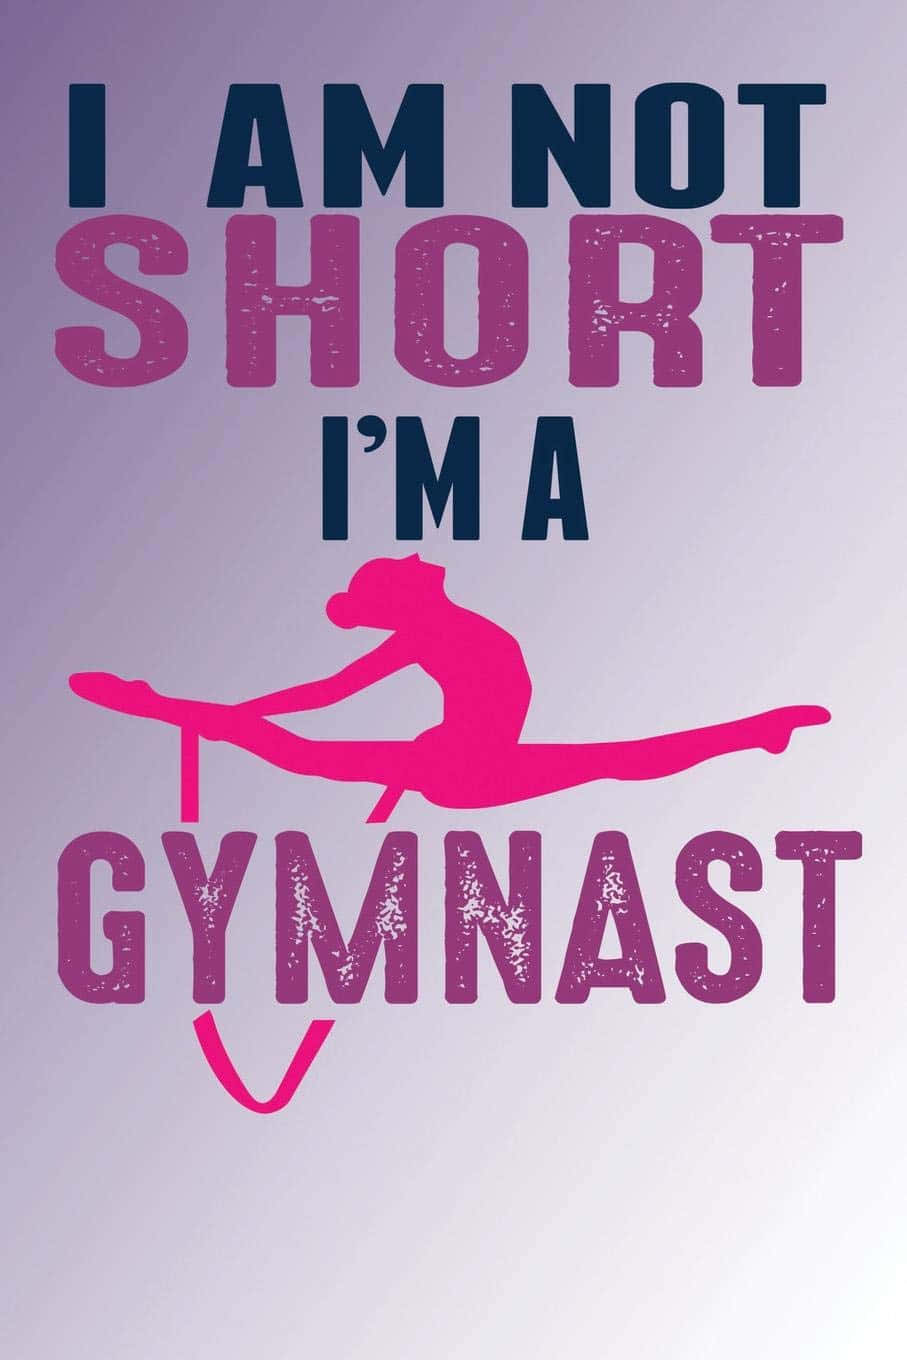 Gymnastics Wallpaper Images  Free Download on Freepik